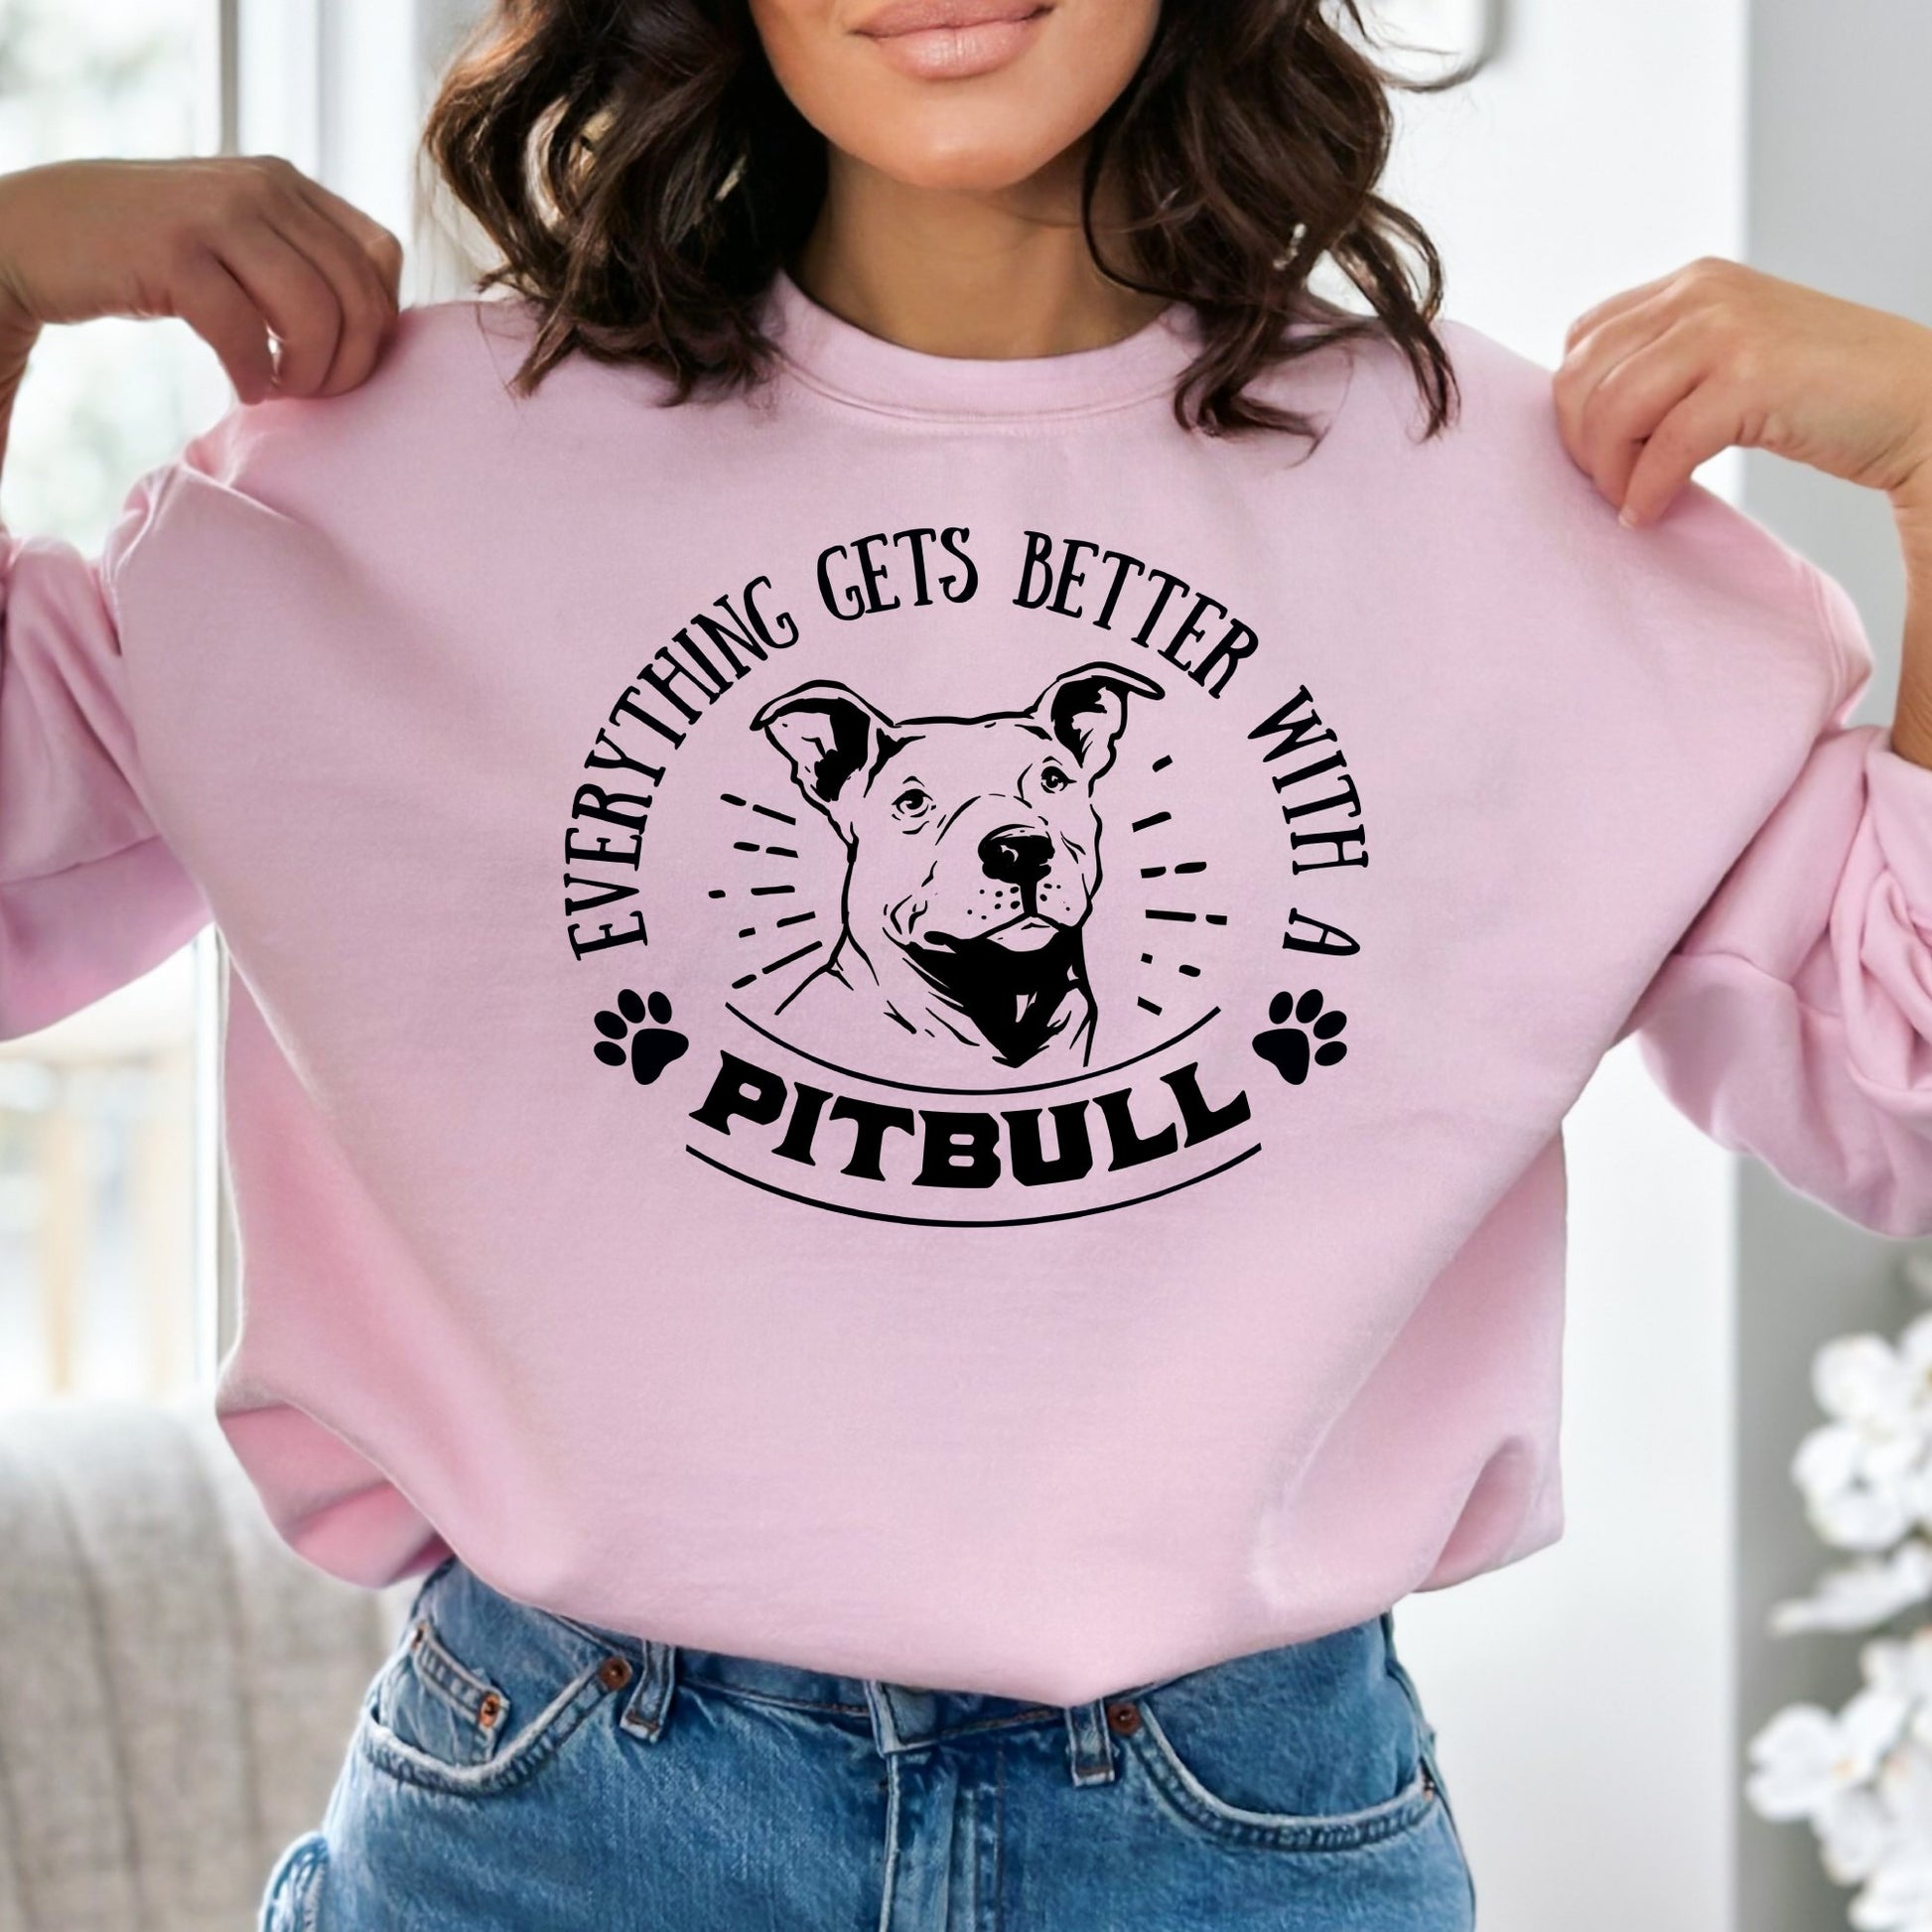 Everything Gets Better With a Pitbull Sweatshirt - Mardonyx Sweatshirt